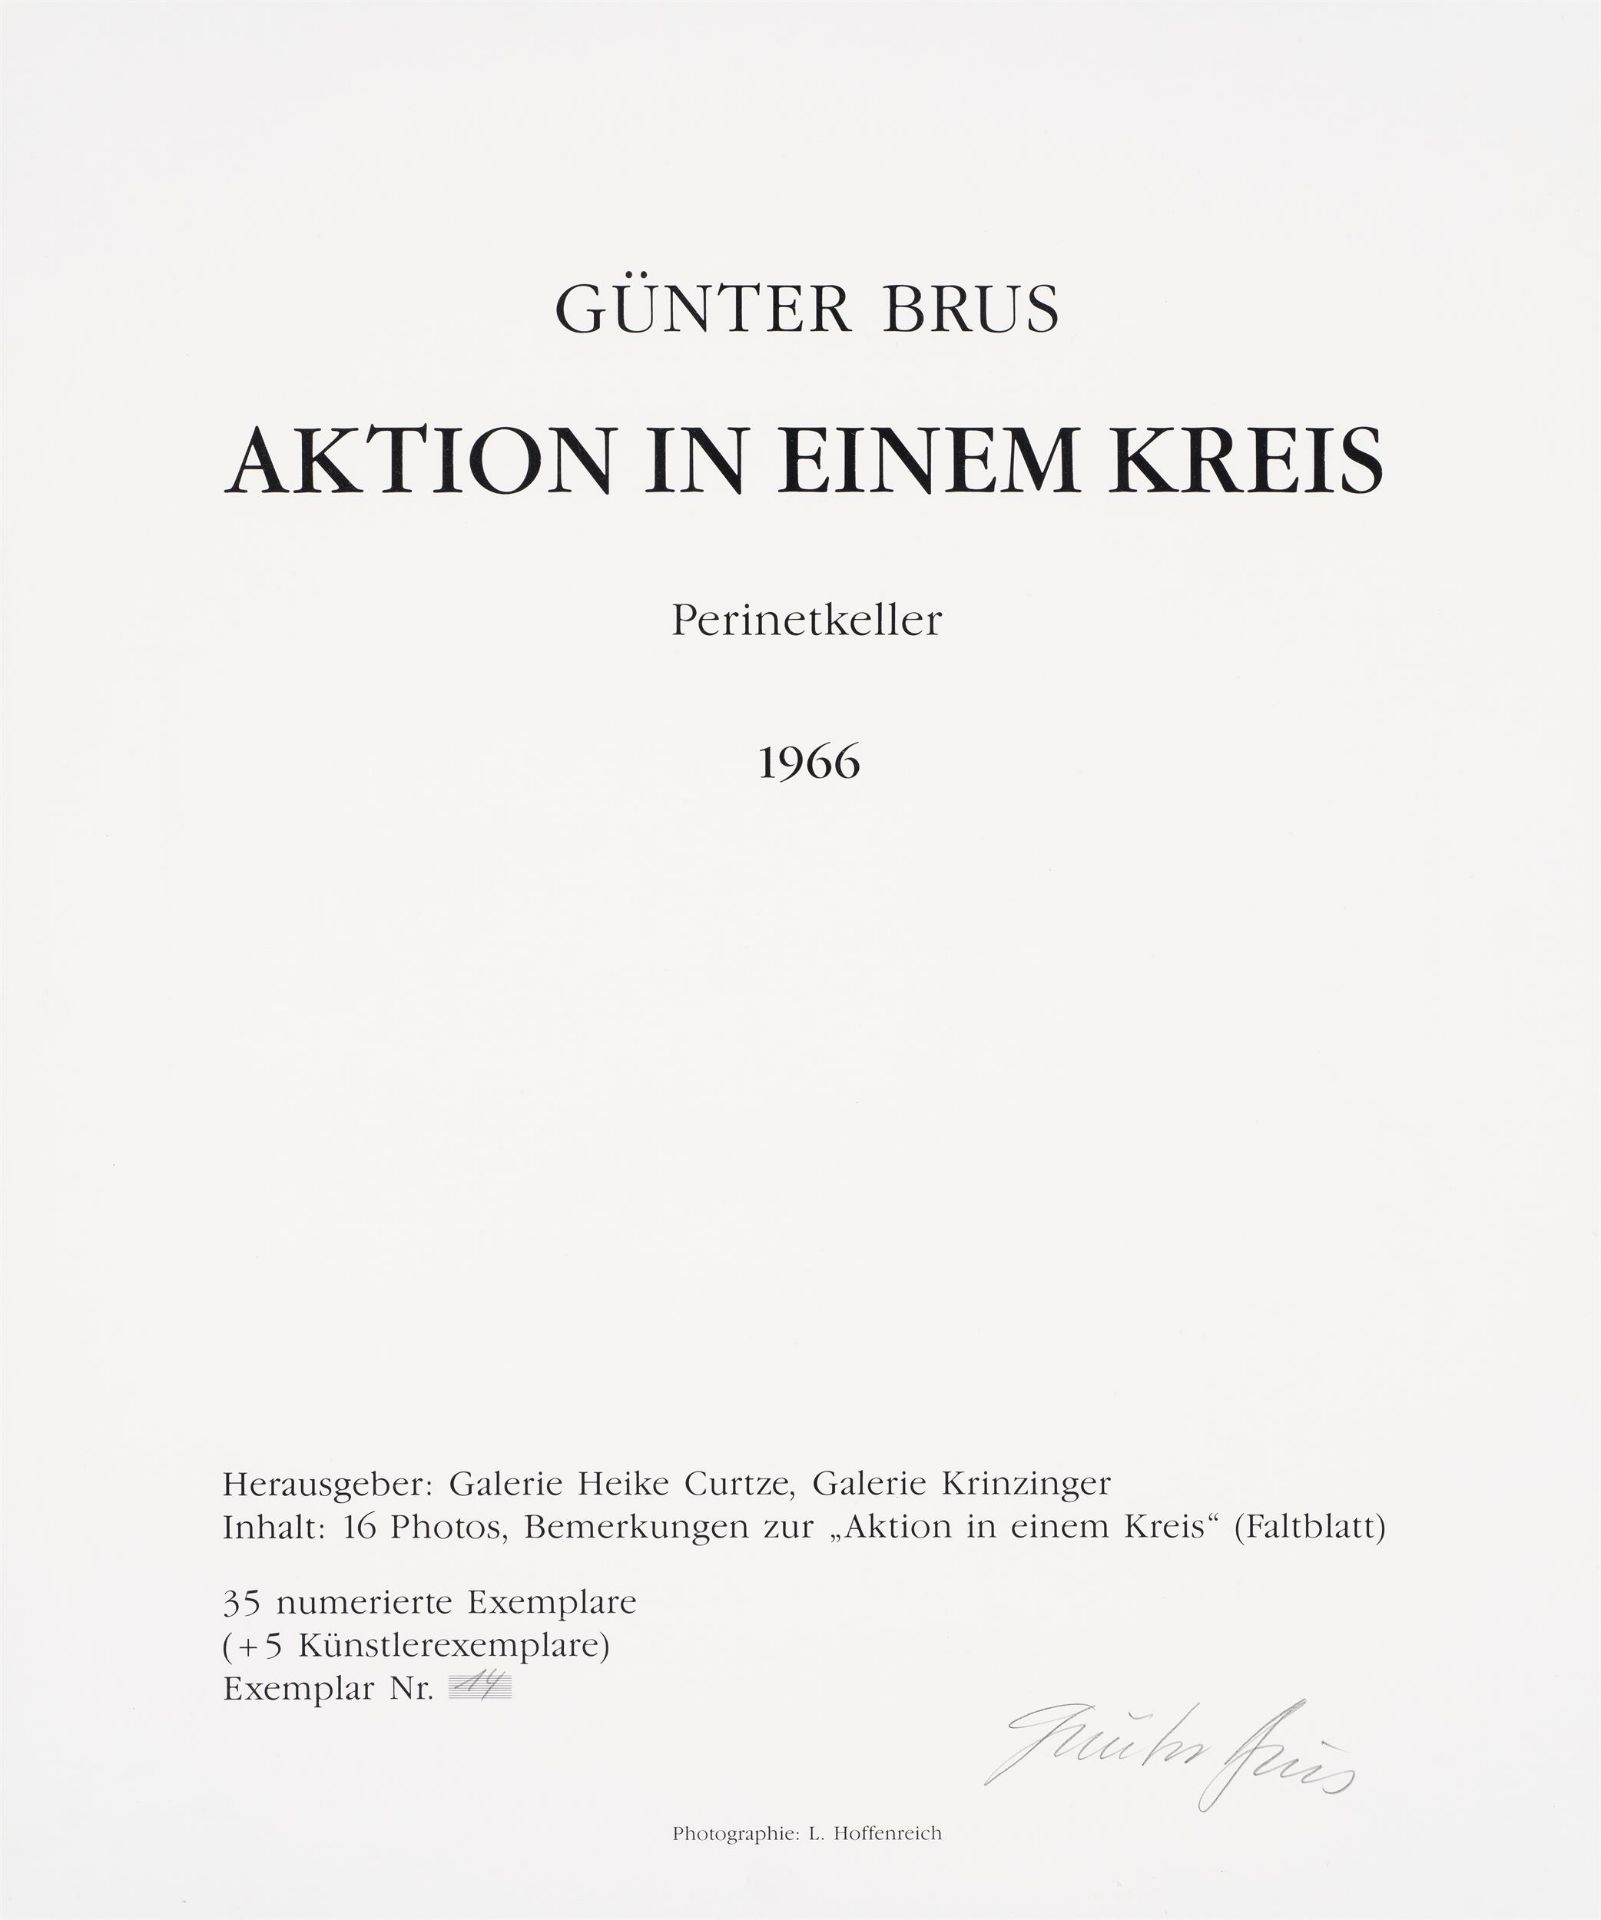 Günter Brus: Folder: Aktion in einem Kreis - Image 12 of 19